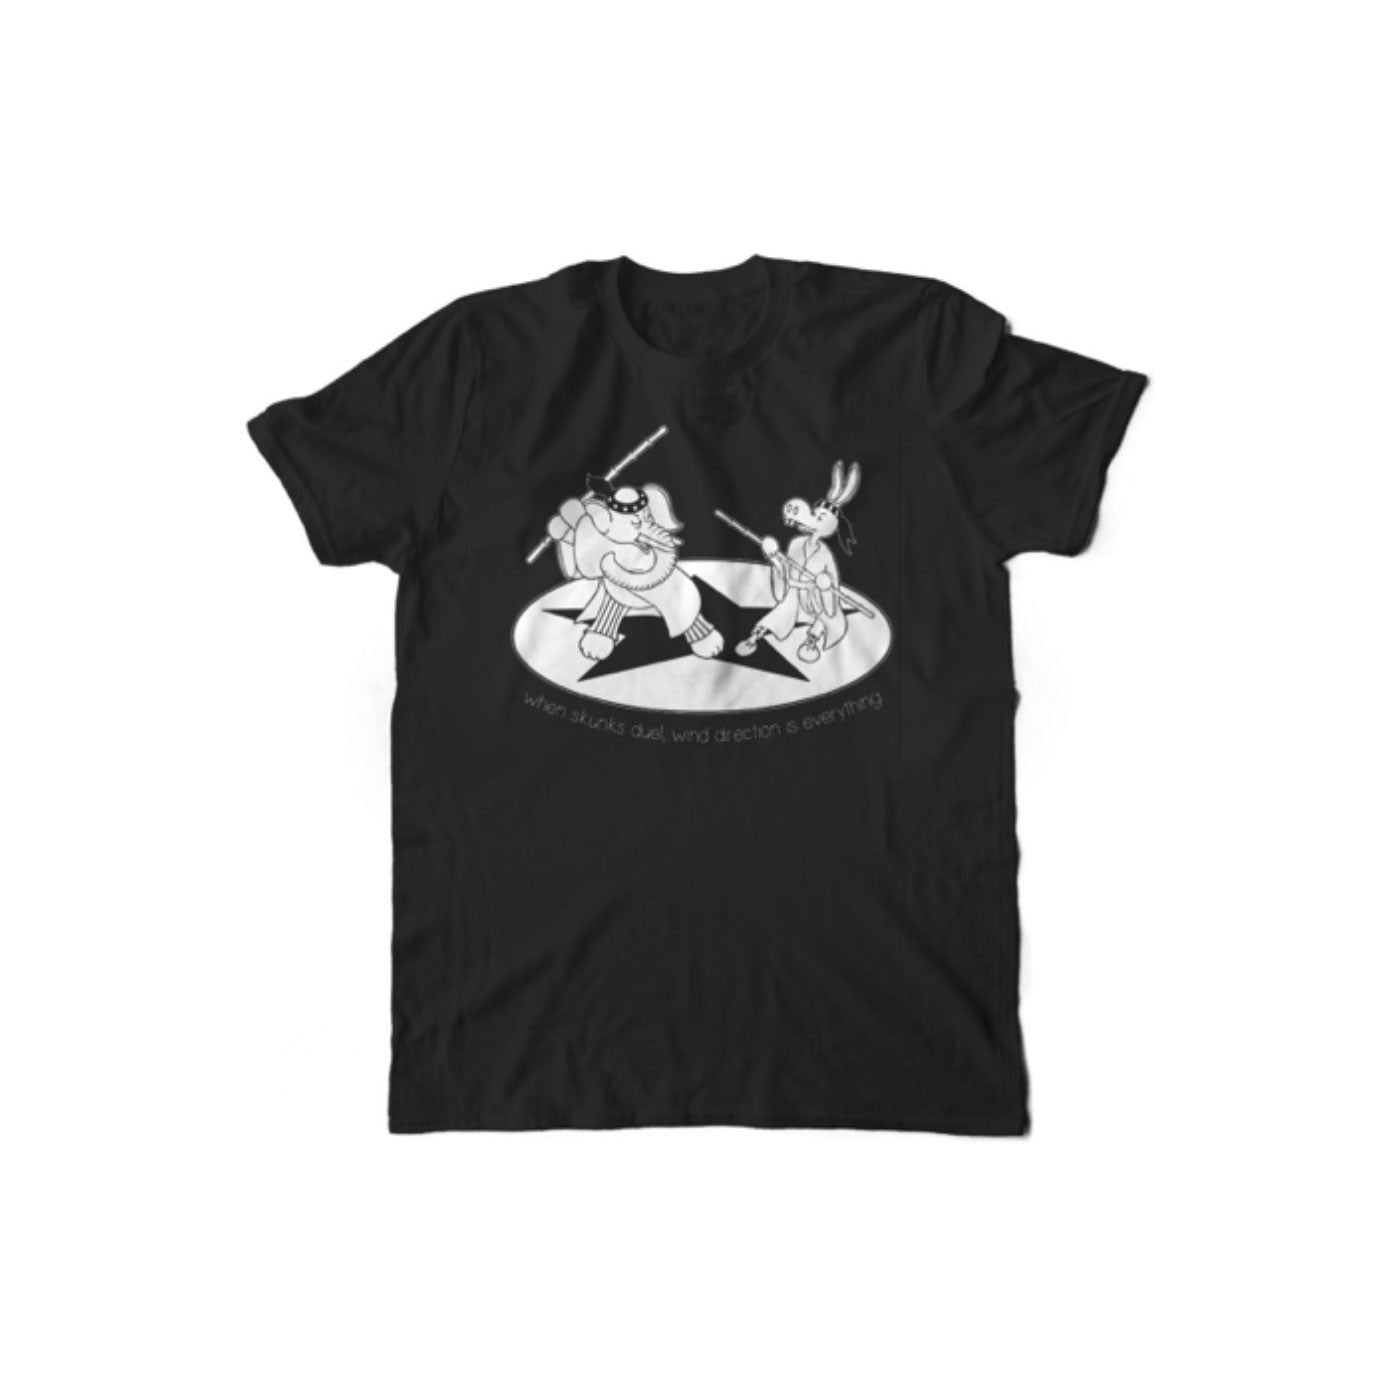 Skunks Dueling ( Democrat or Republican ) T-shirt 